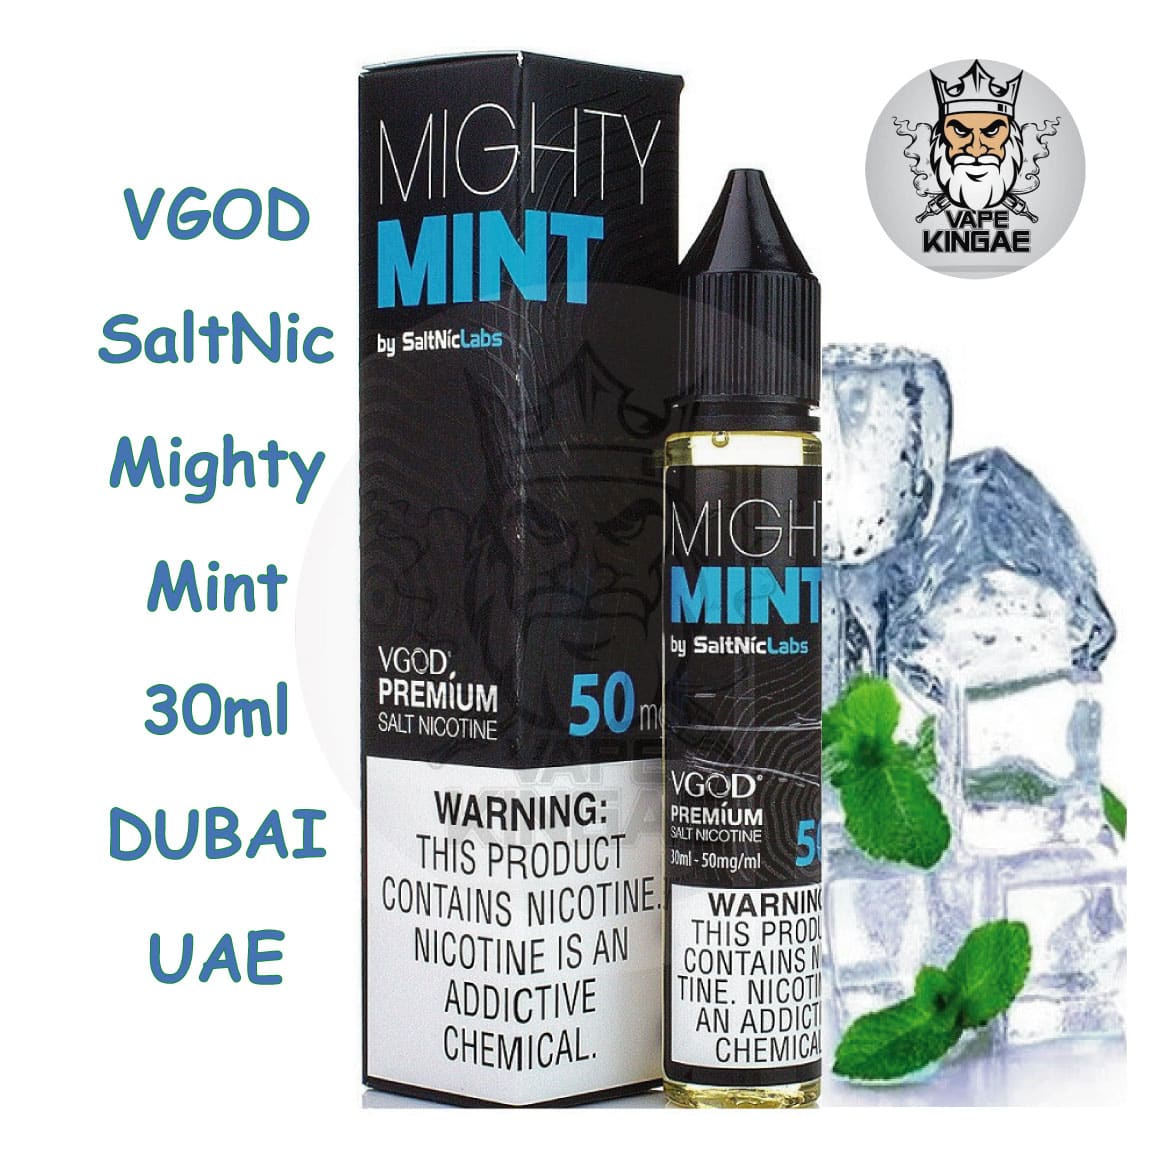 VGOD SaltNic Mighty Mint 30ml Best